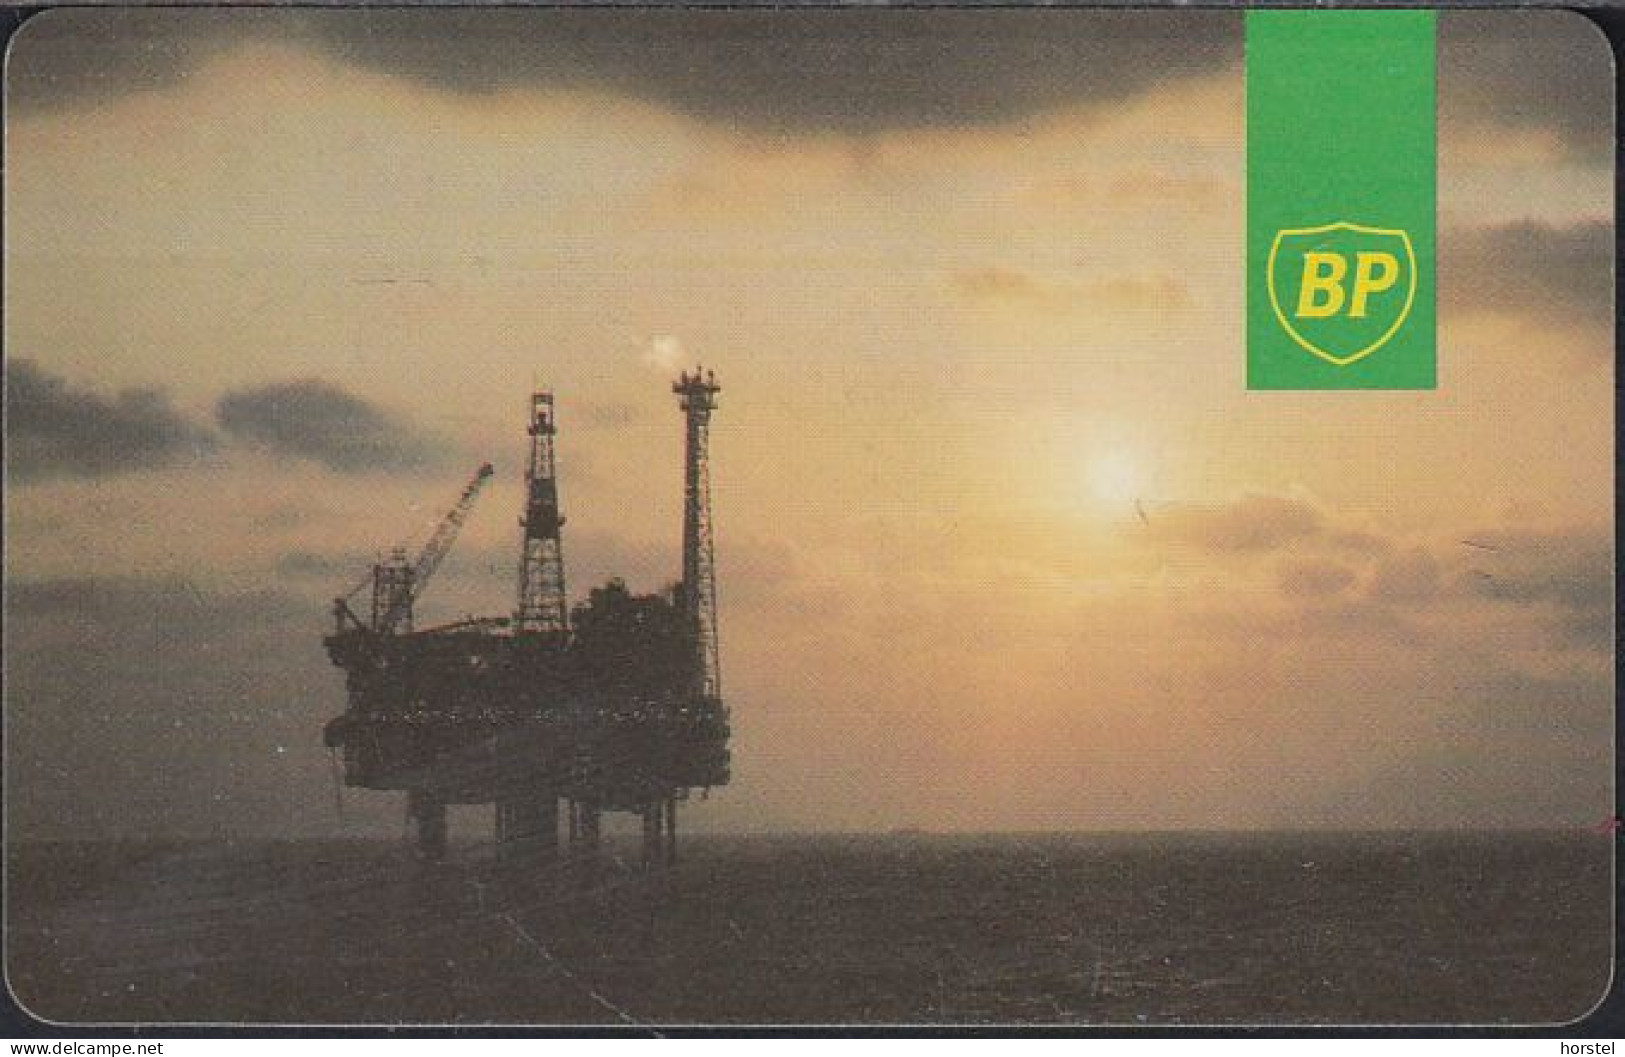 UK - GB-OIL-AUT-0001 Payphone IPL Autelca - BP - Oil Bohrinsel - 20 Units - Mint - Boorplatformen